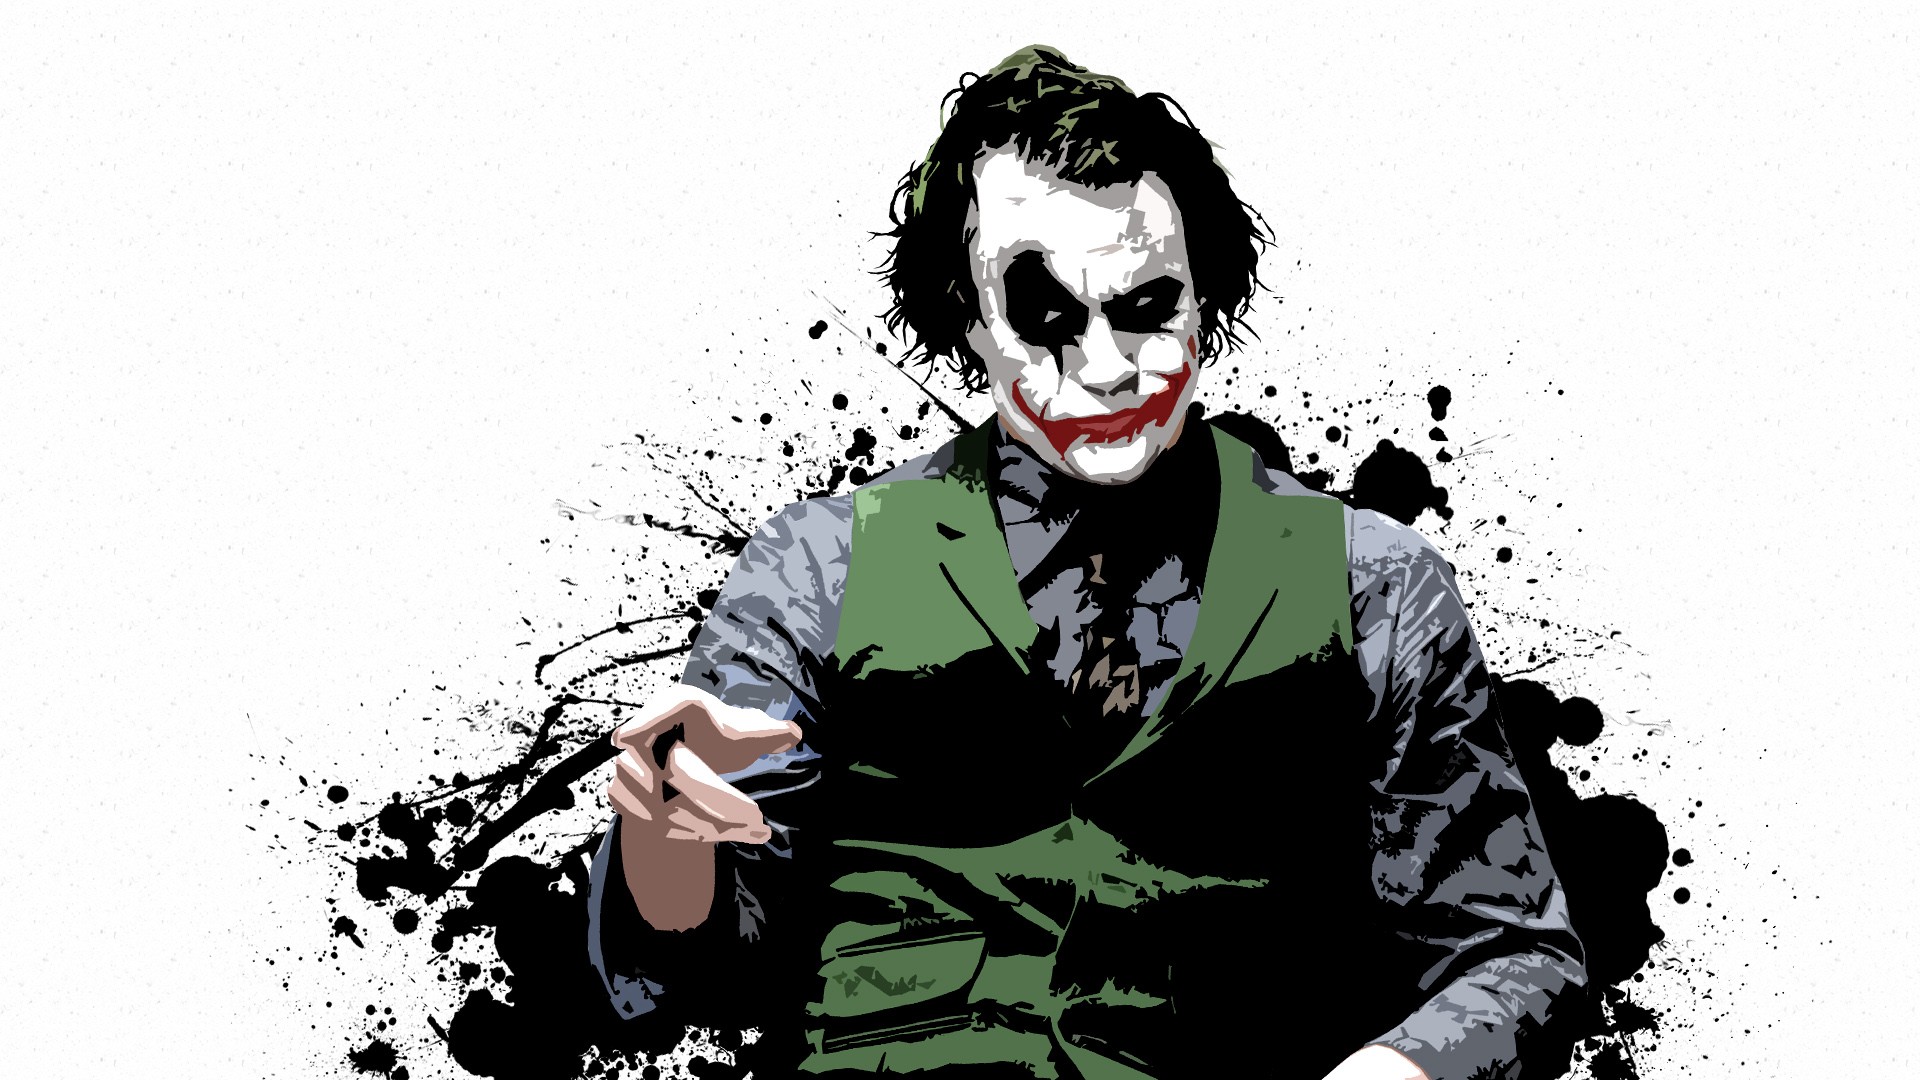 General 1920x1080 Joker The Dark Knight paint splatter Batman MessenjahMatt Heath Ledger movies actor deceased DC Comics Christopher Nolan